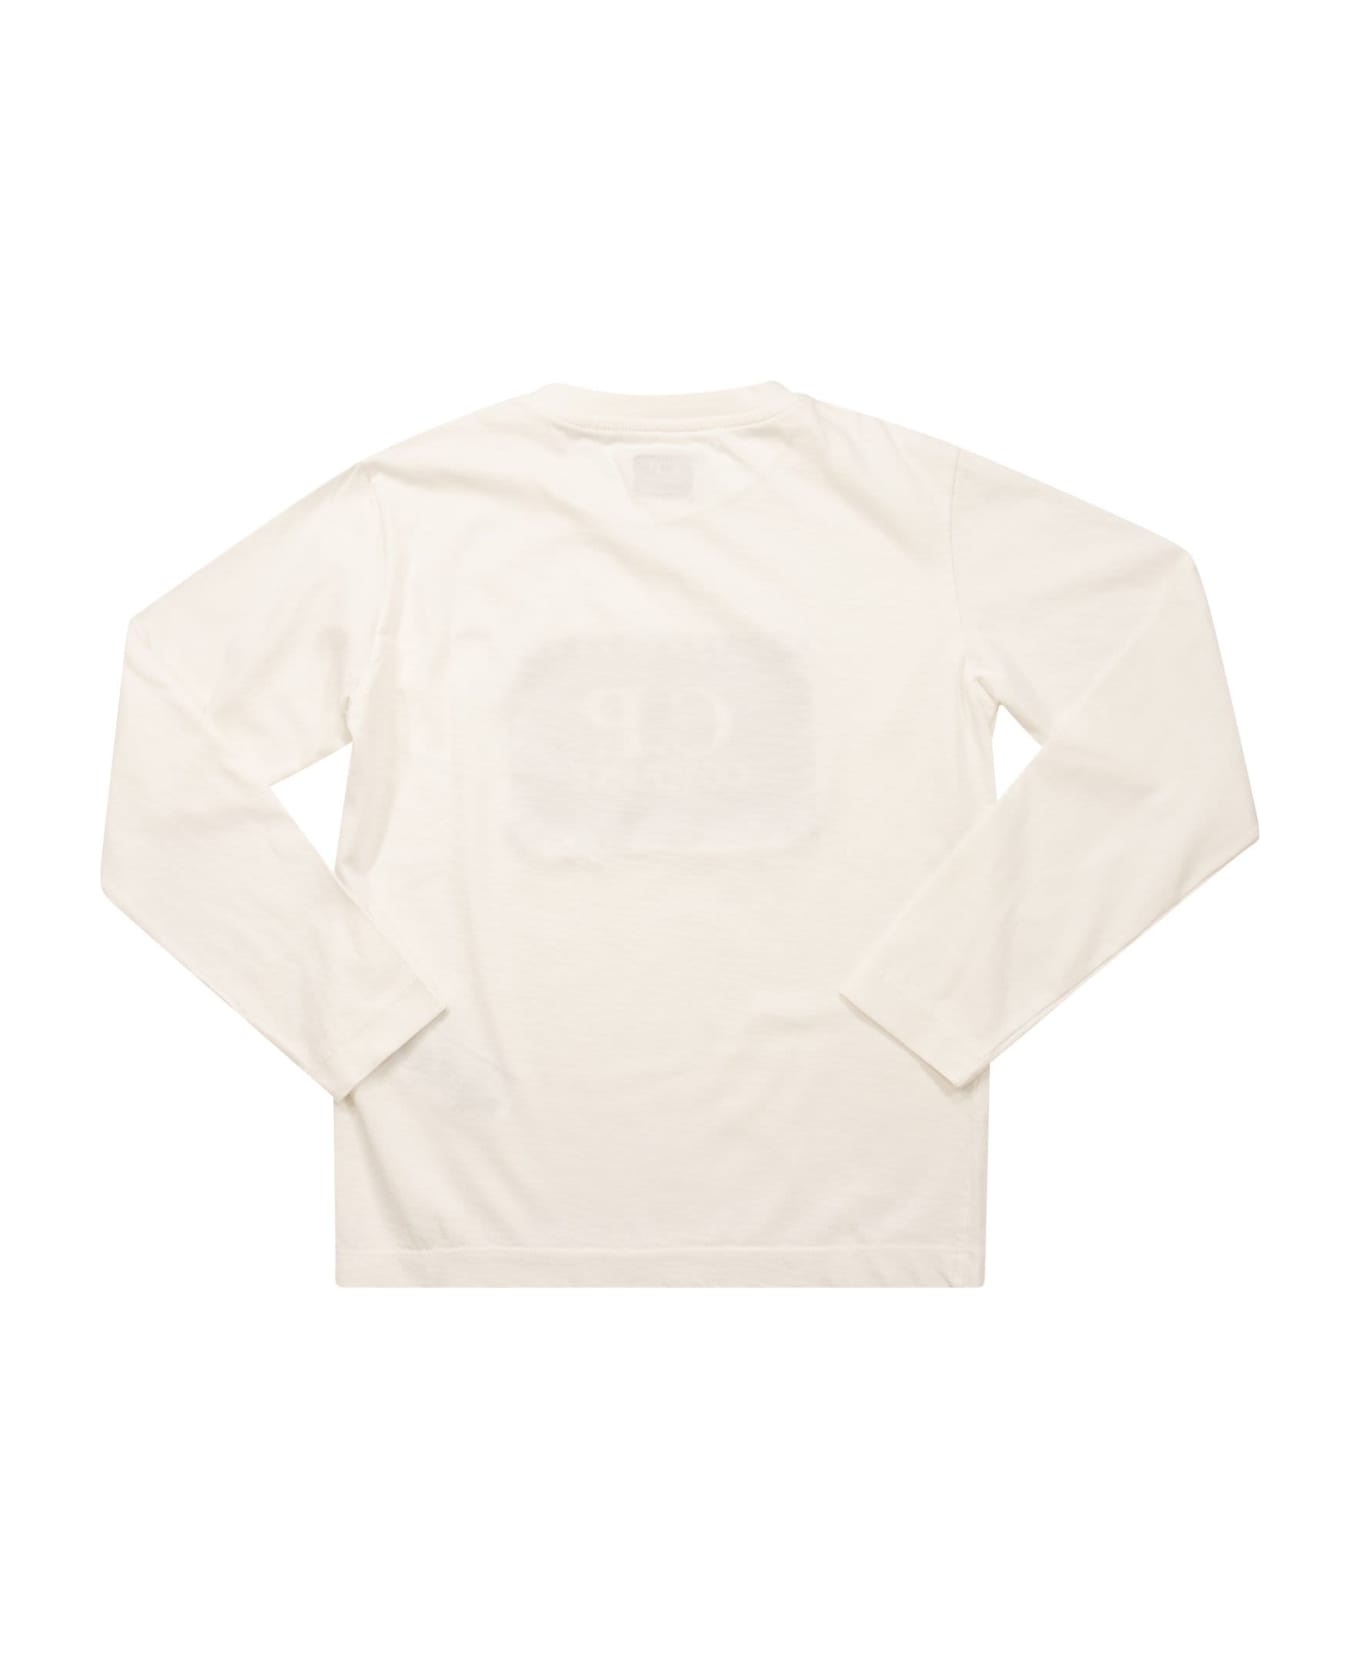 C.P. Company Logo Long Sleeved T-shirt - White